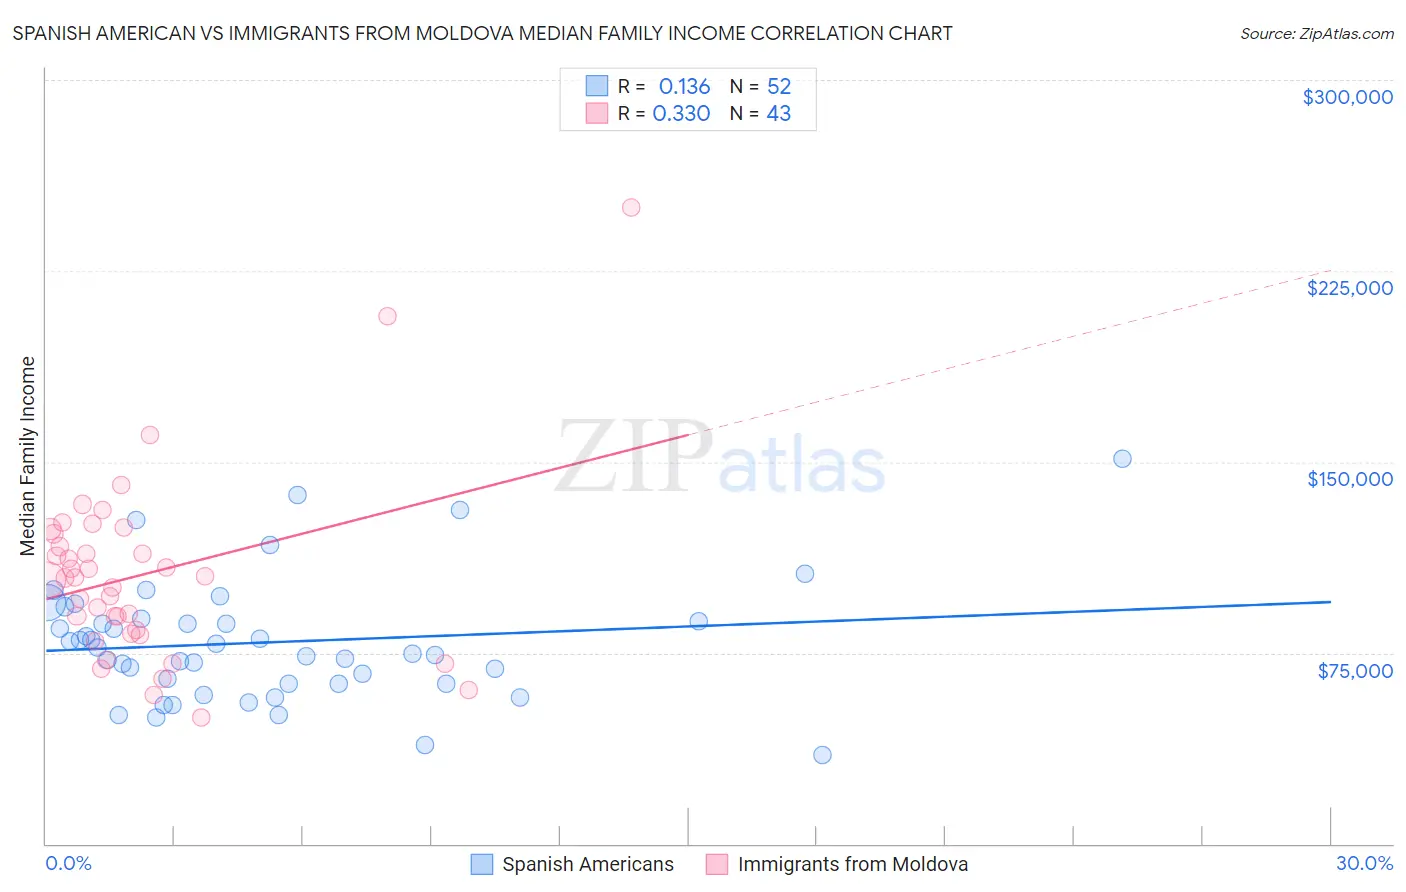 Spanish American vs Immigrants from Moldova Median Family Income